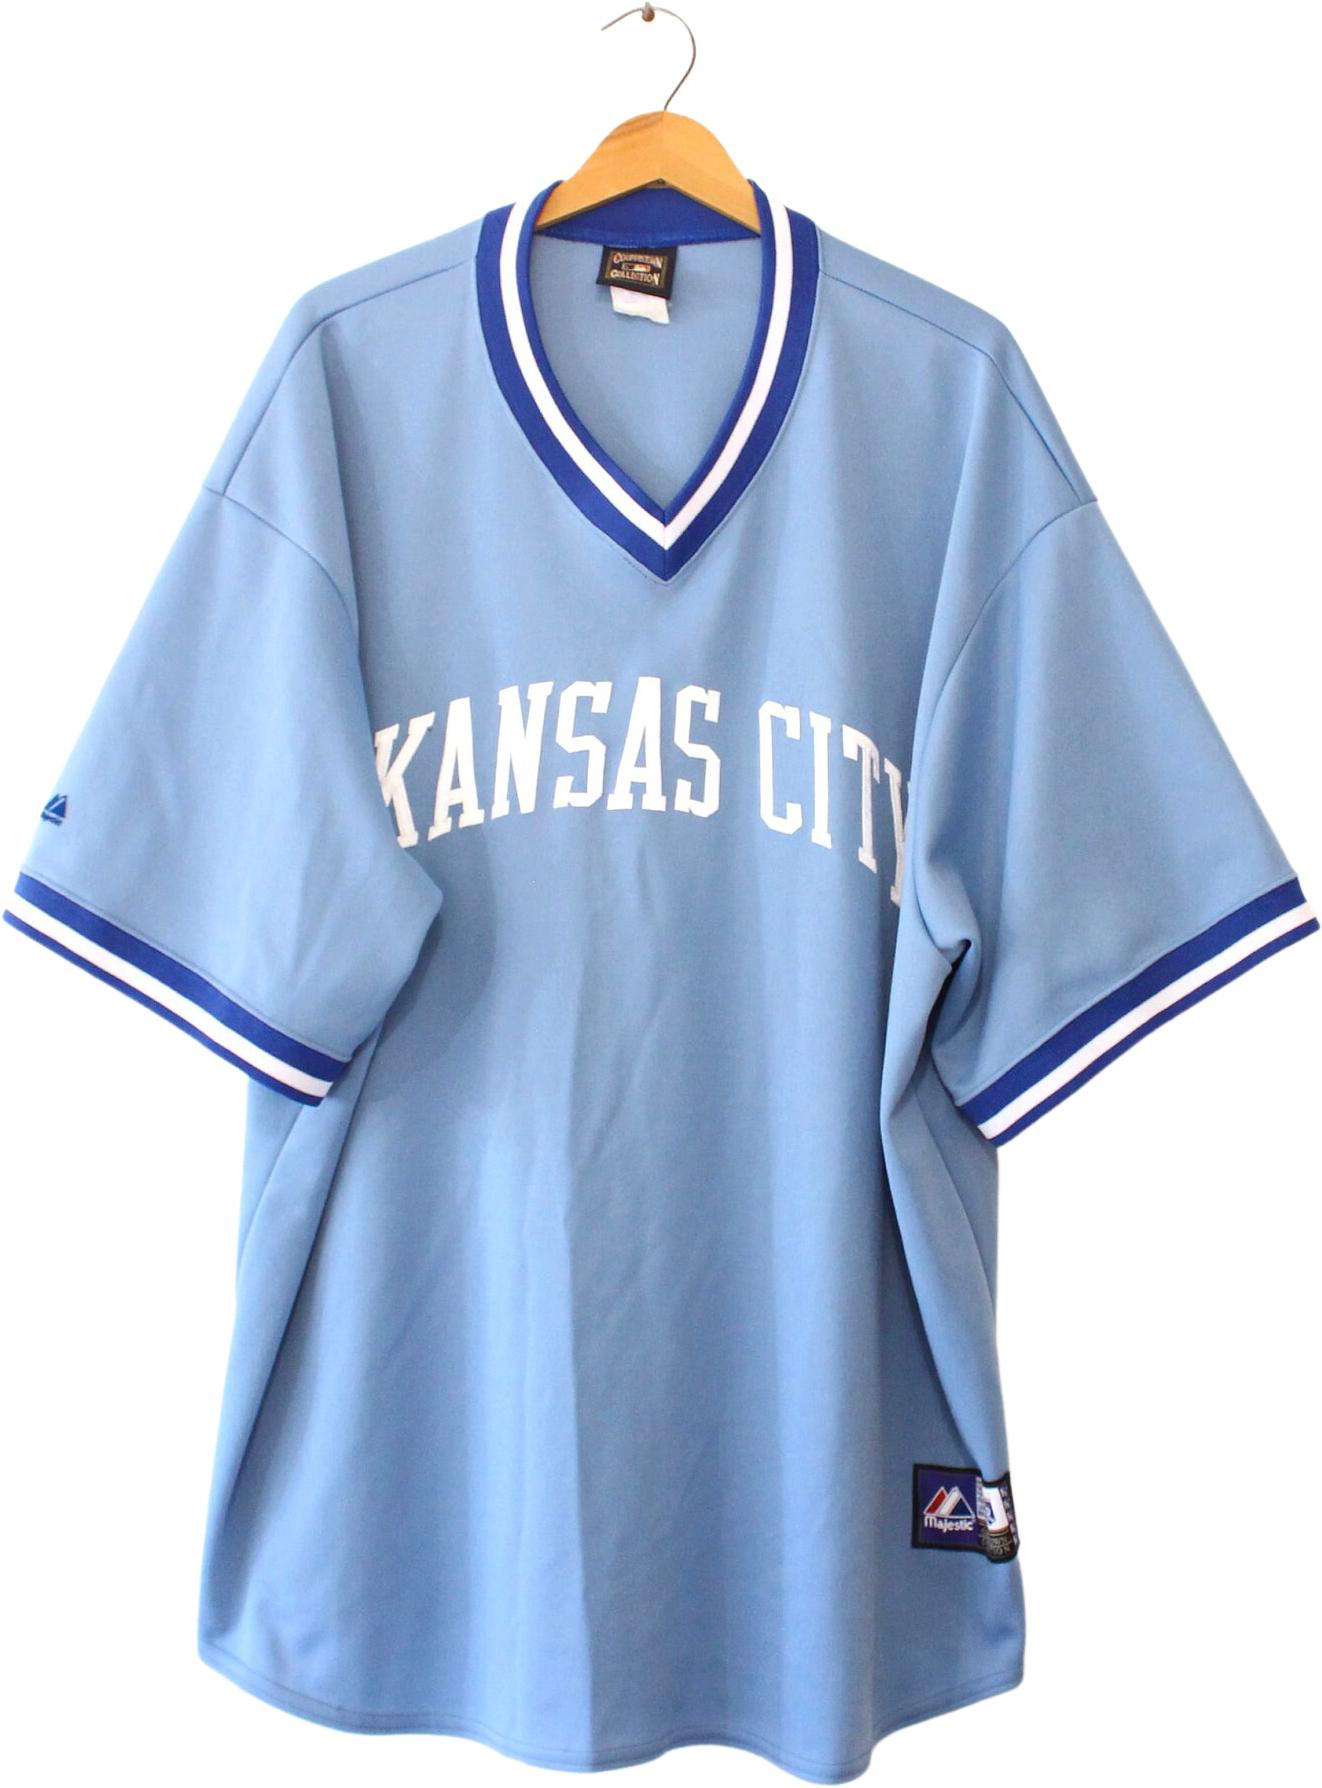 Baseball Jersey Kansas City Royals W/2 Toned Pinstriped Cotton